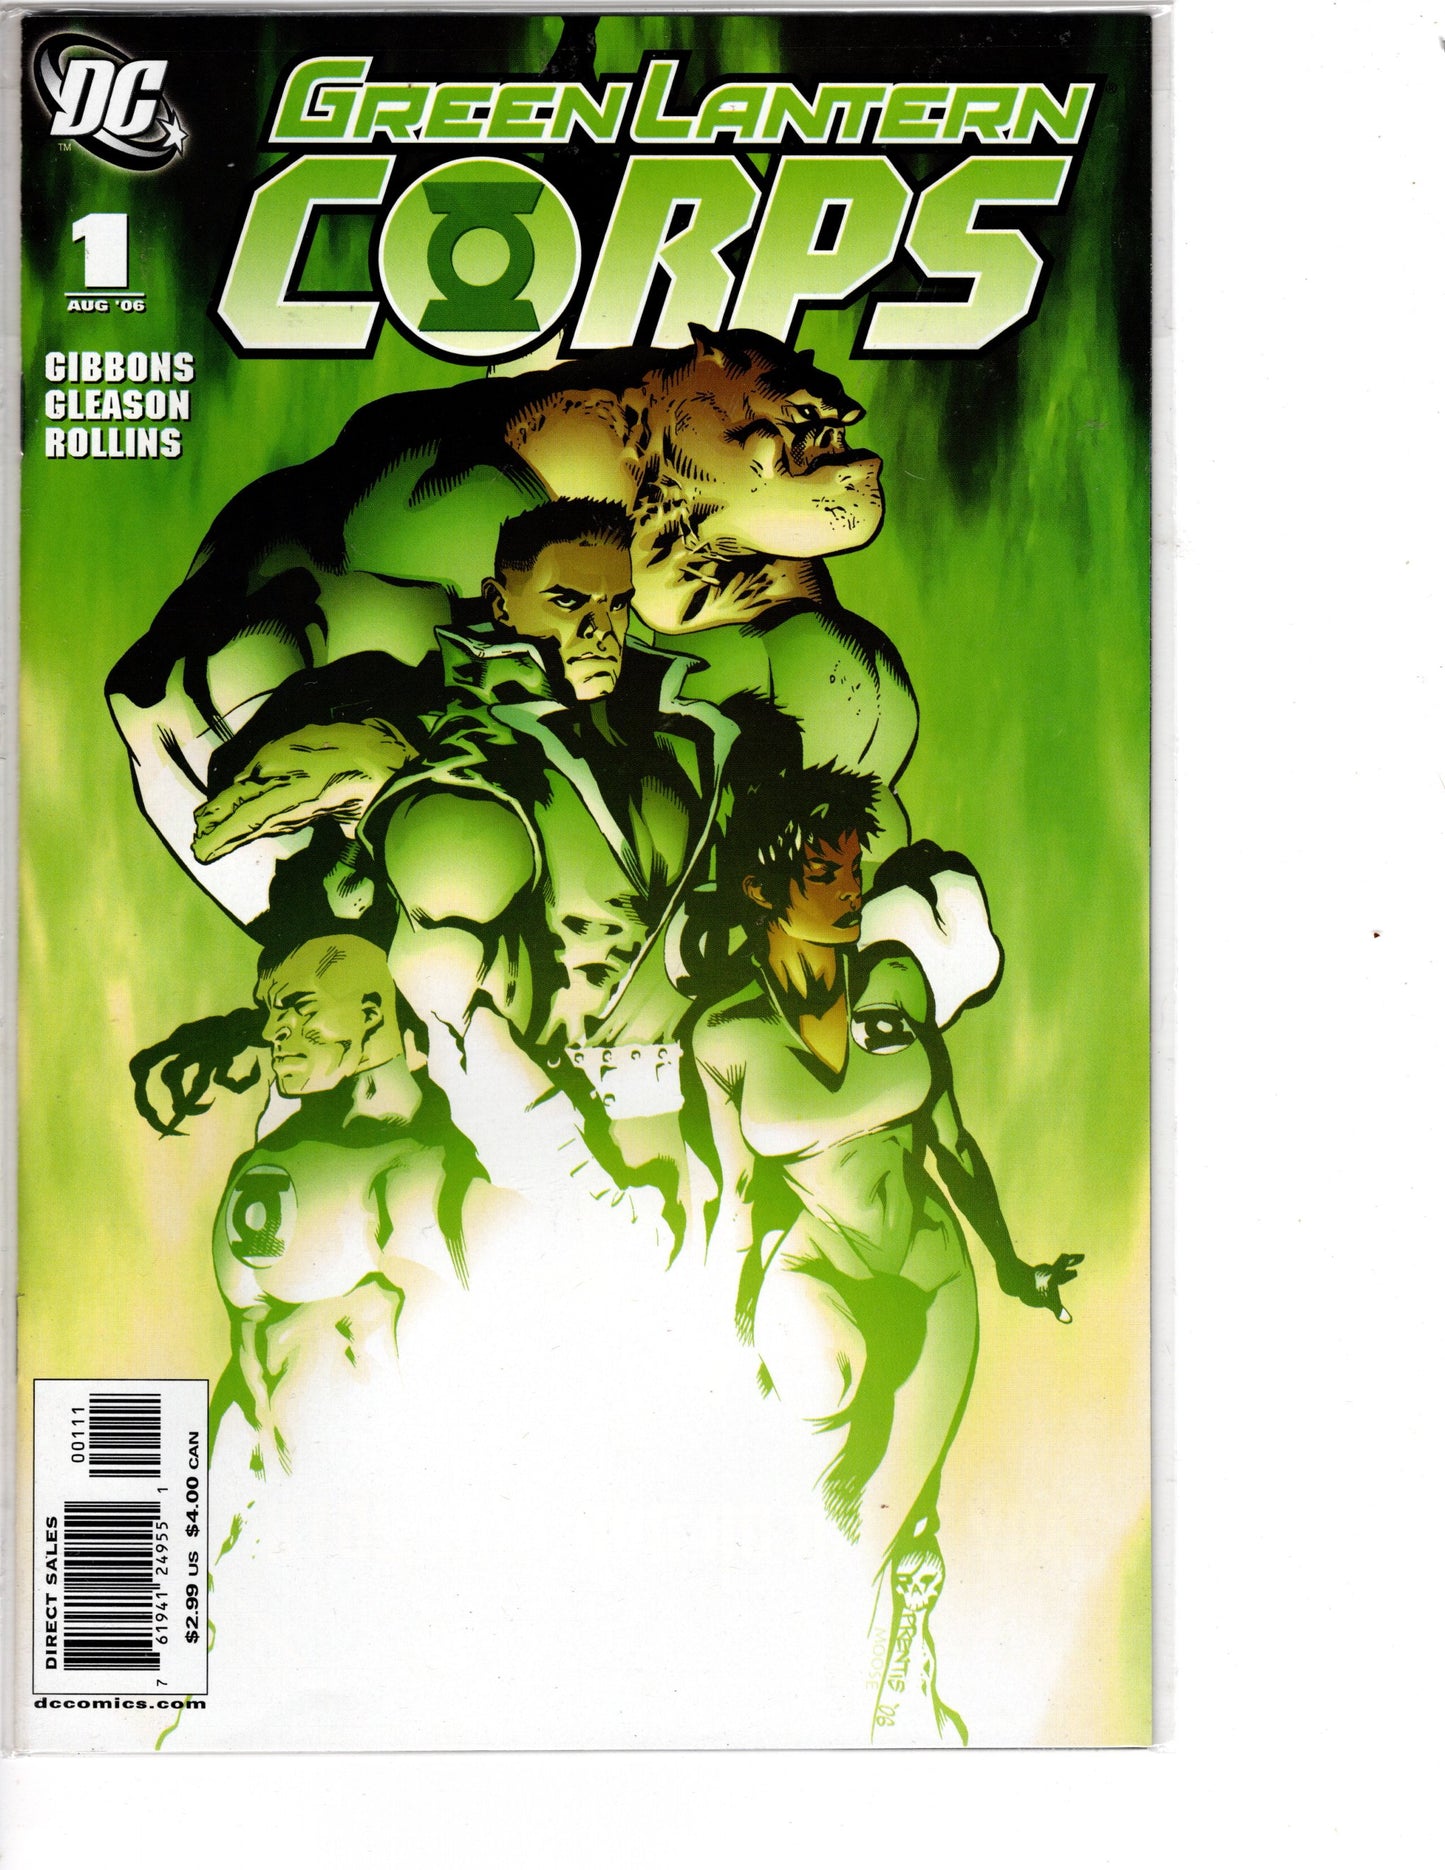 The Green Lantern Corps #1